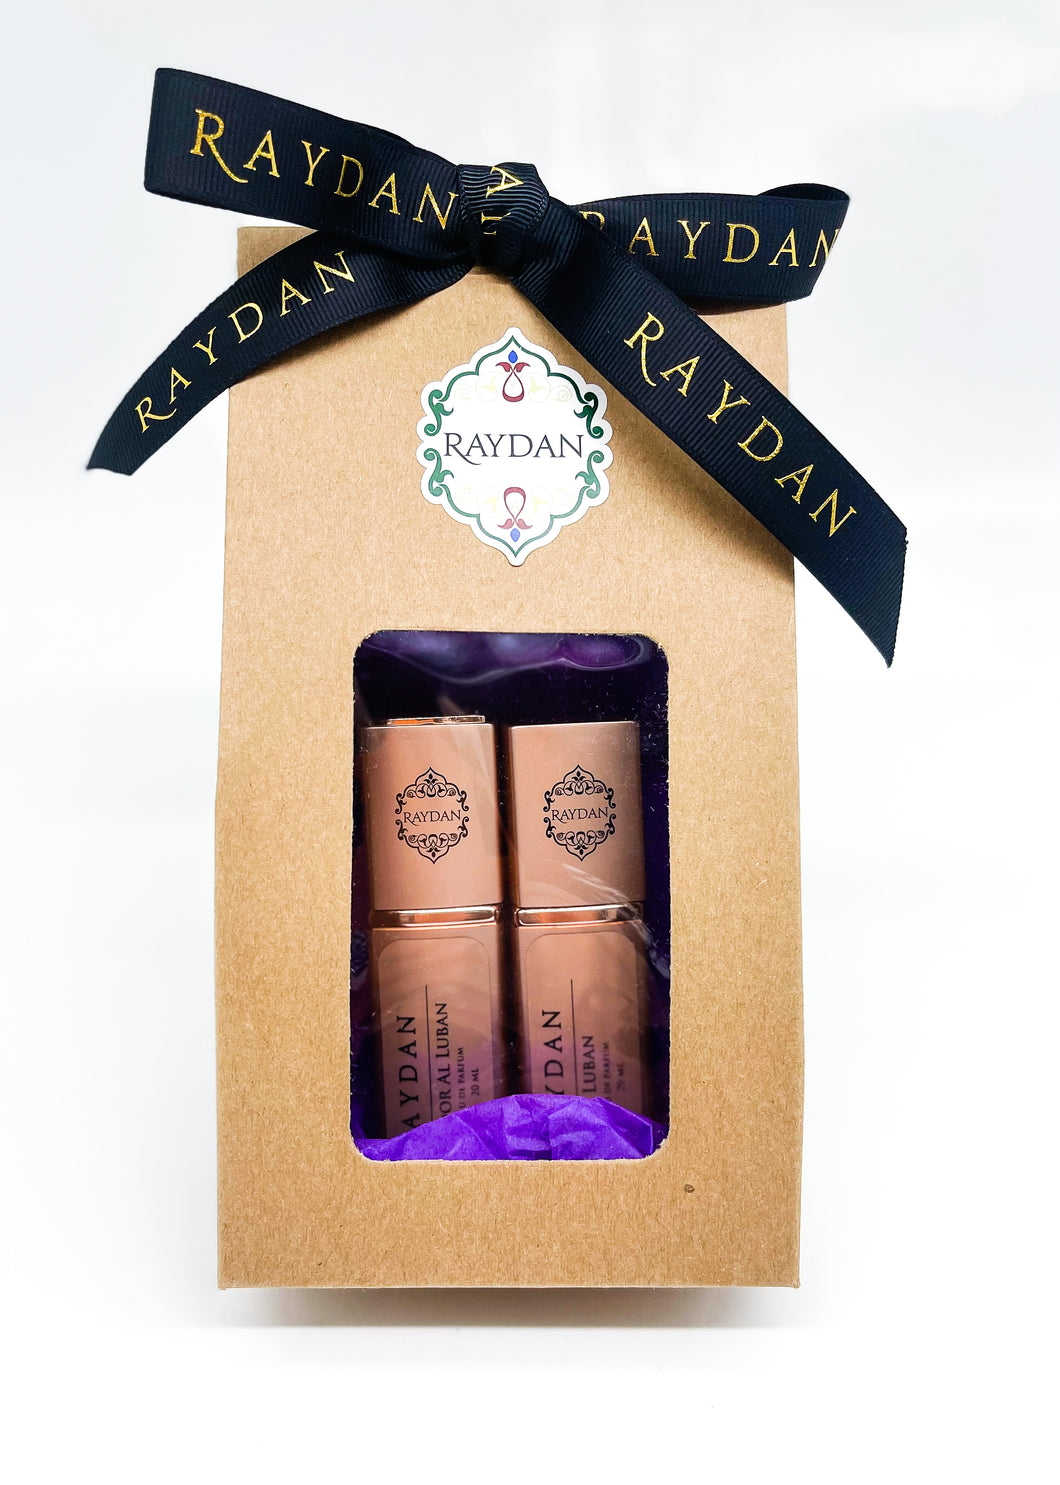 Raydan perfume gift set